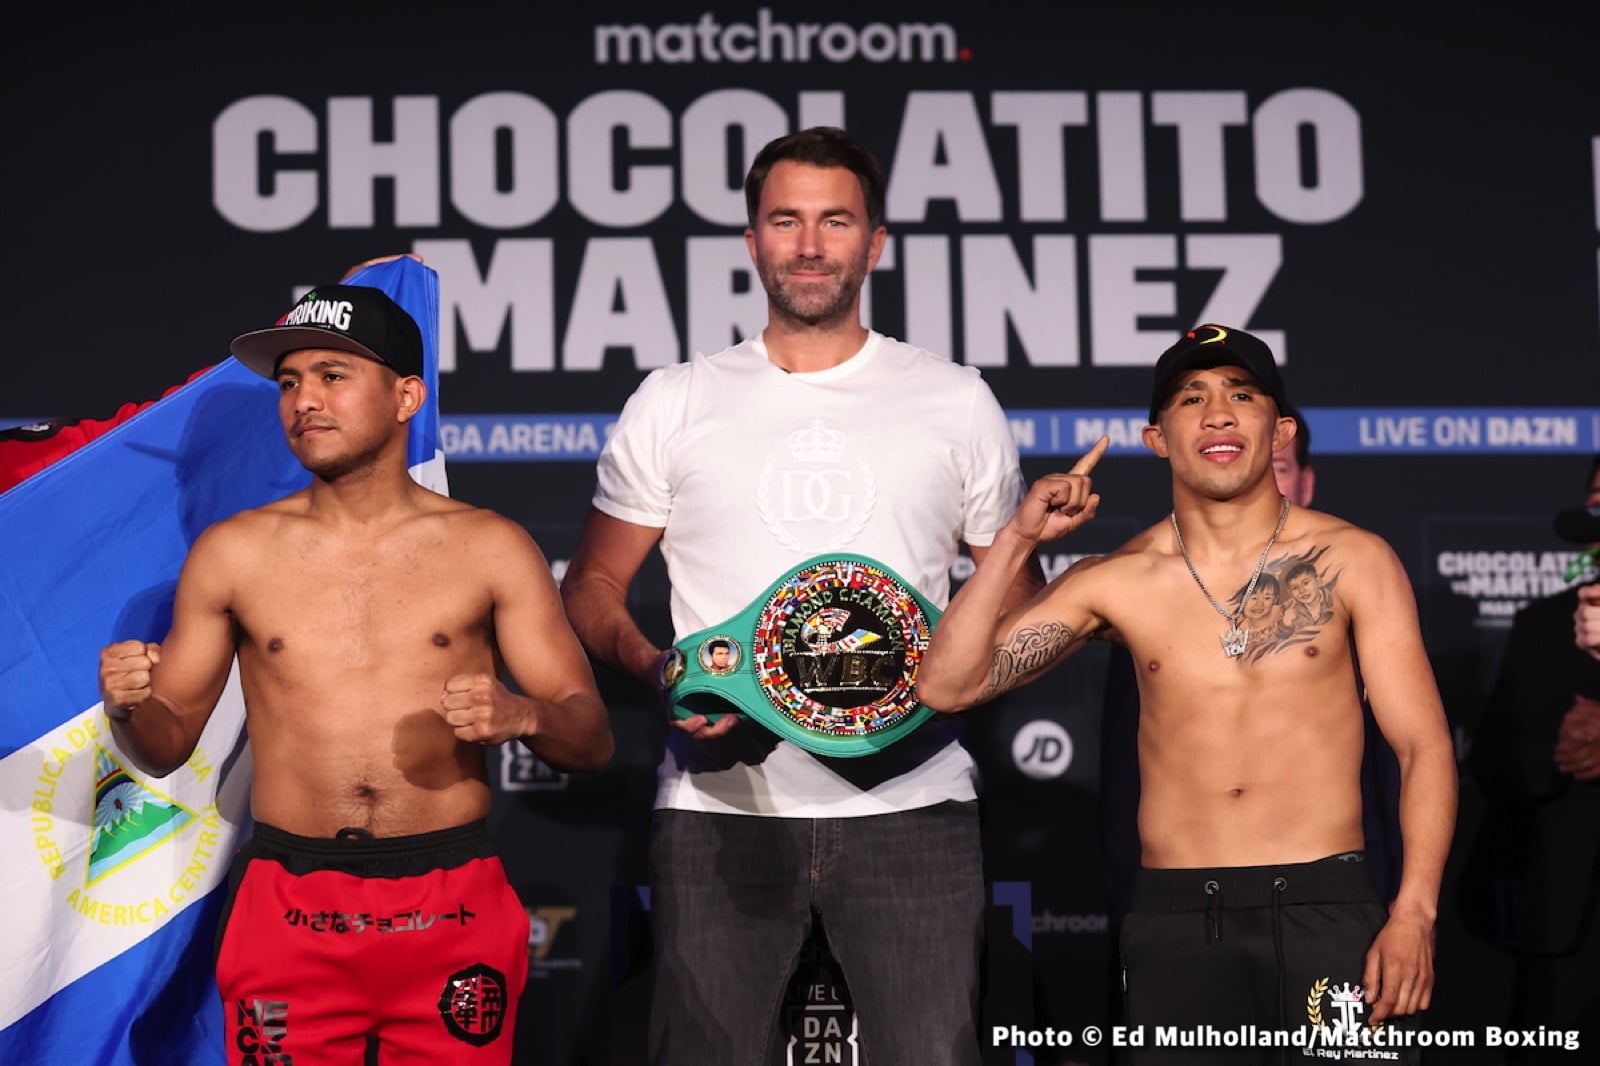 Gonzalez vs. Martinez boxing photo